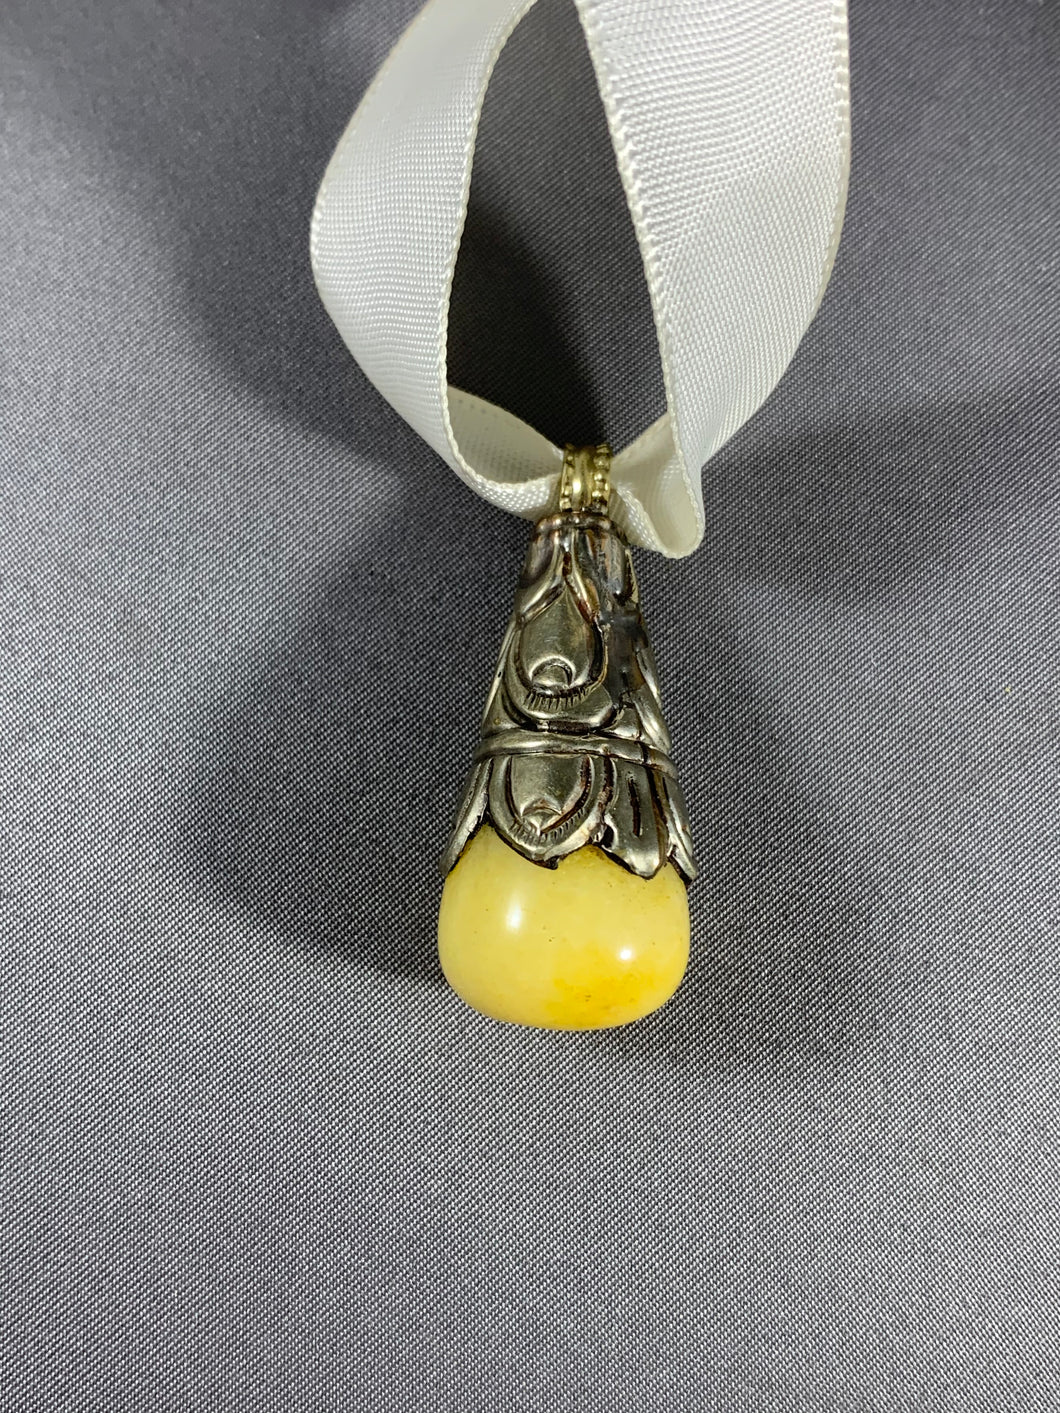 Tibetan Pendant Yellow Jade Stone Silver Repousse Jewelry